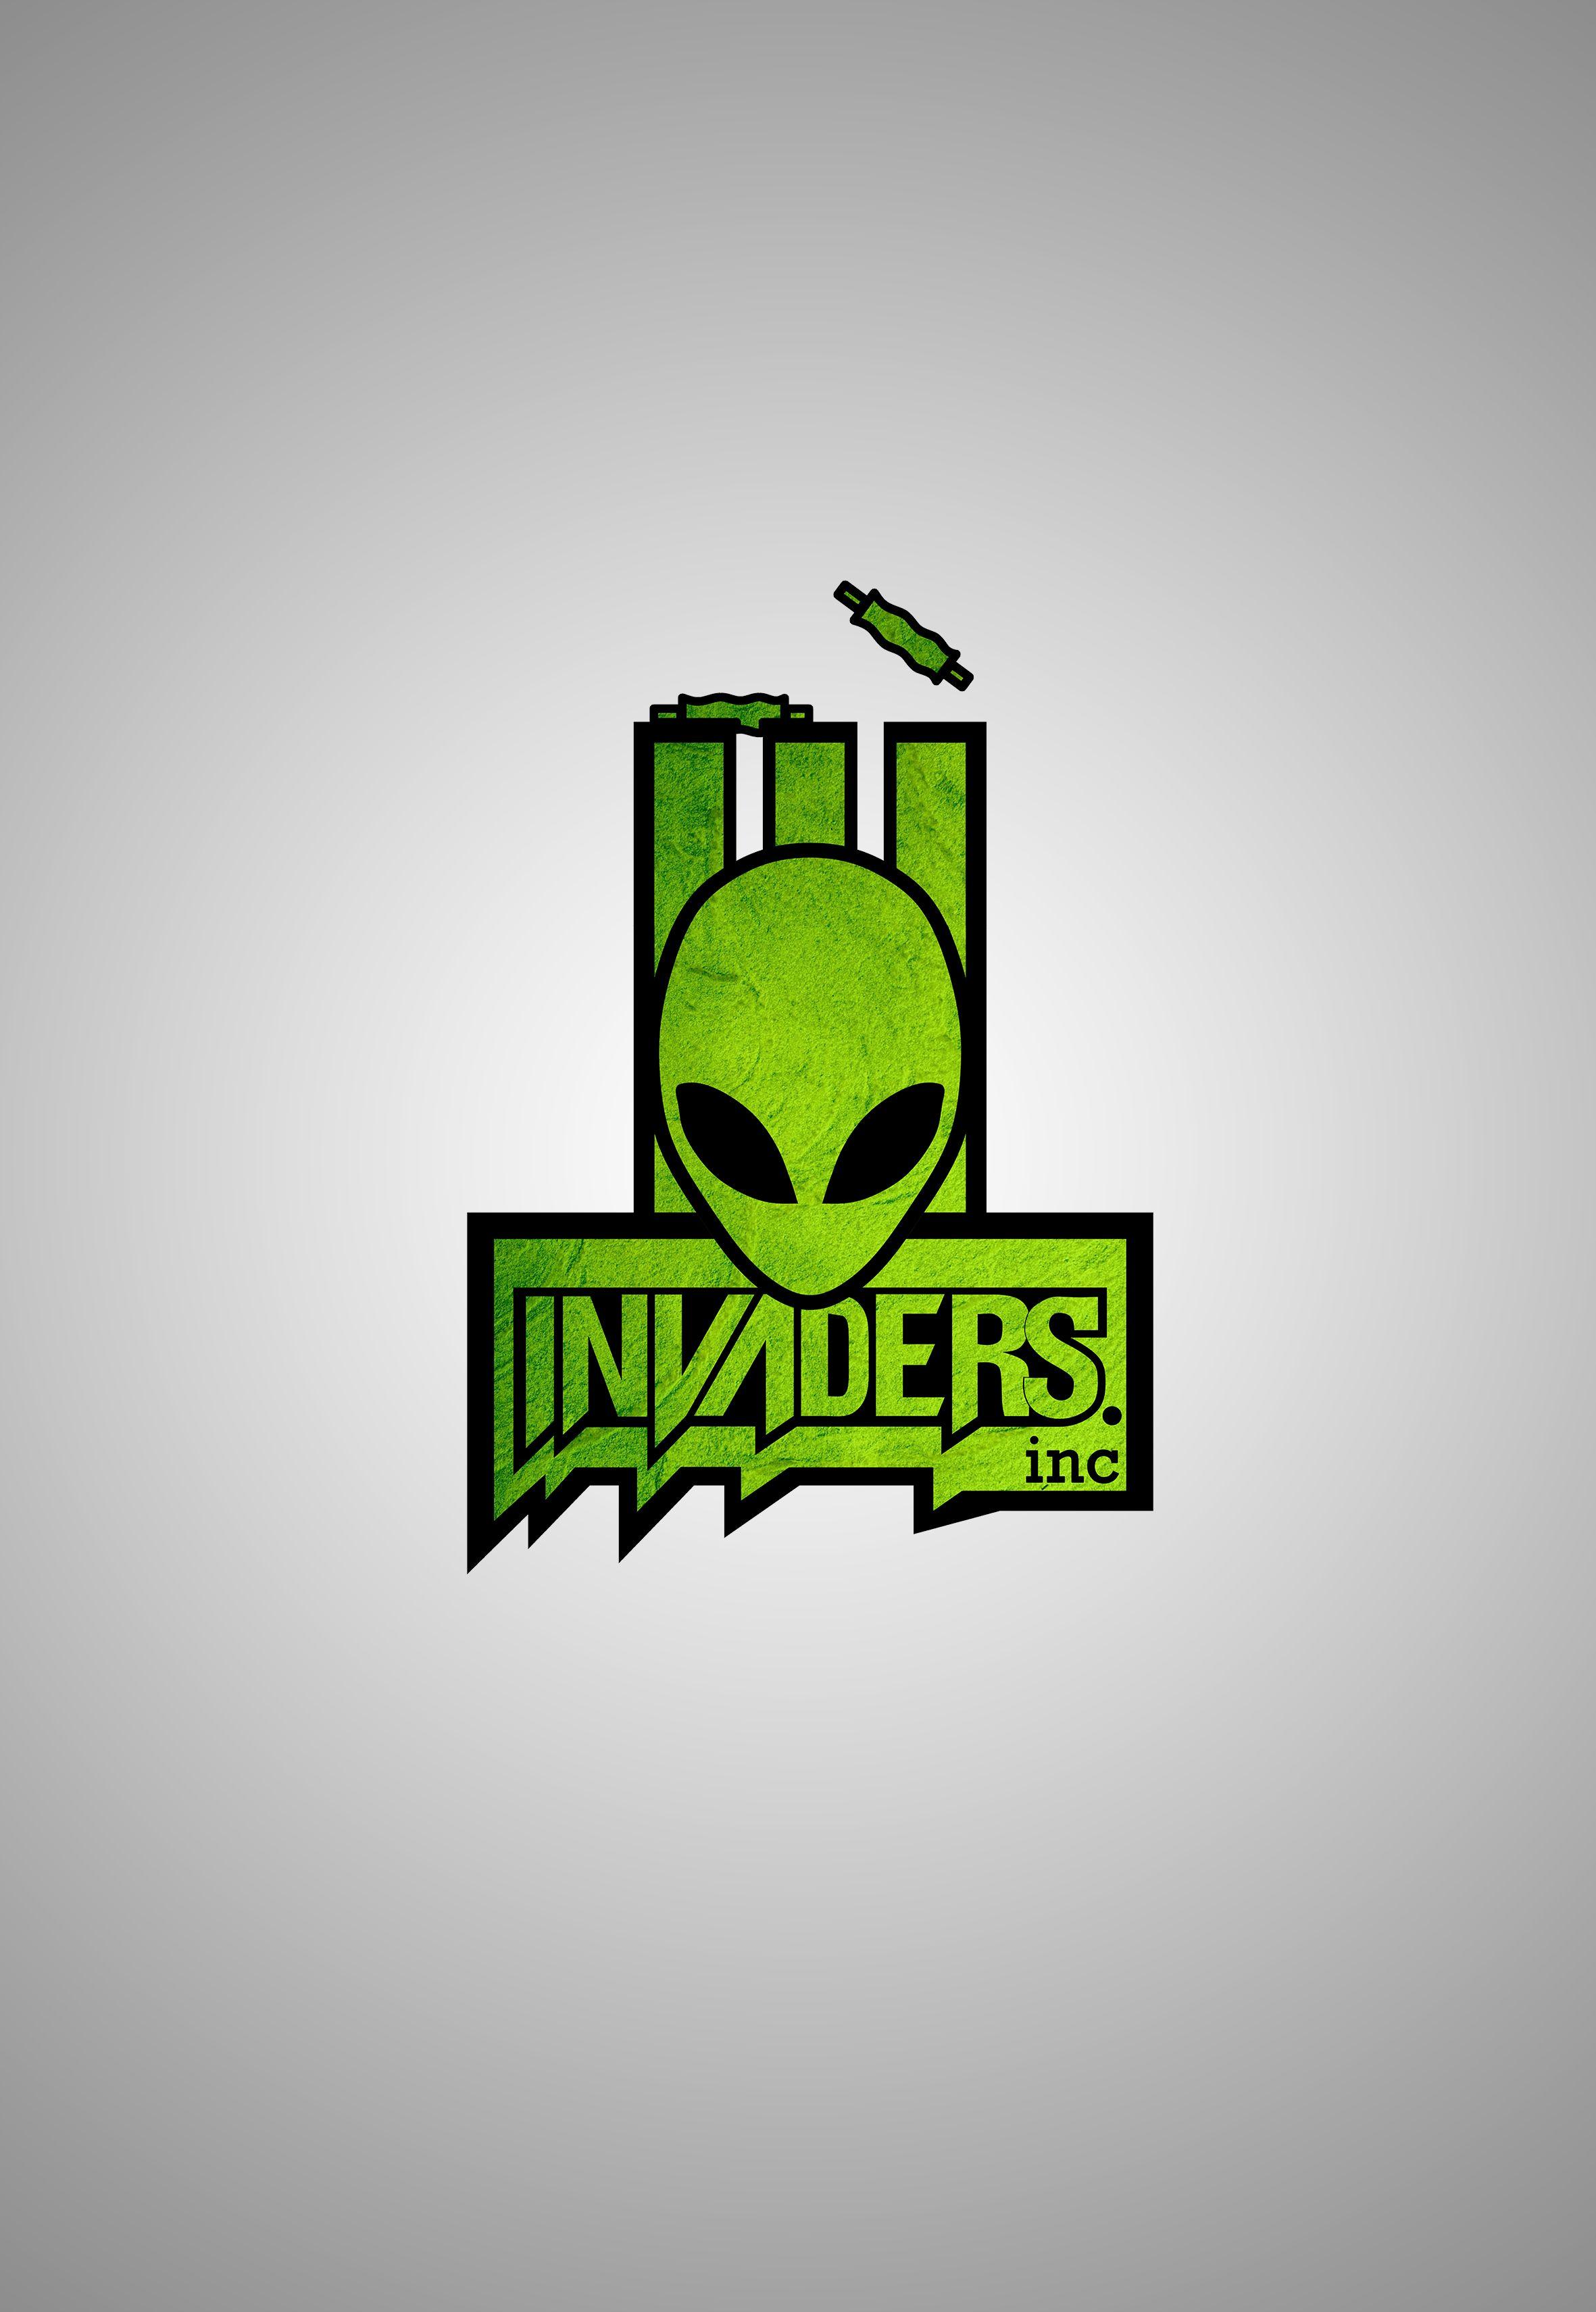 Cricket Team Logo - Cricket Team logo.inc creator: Saifiz. My LogO Design